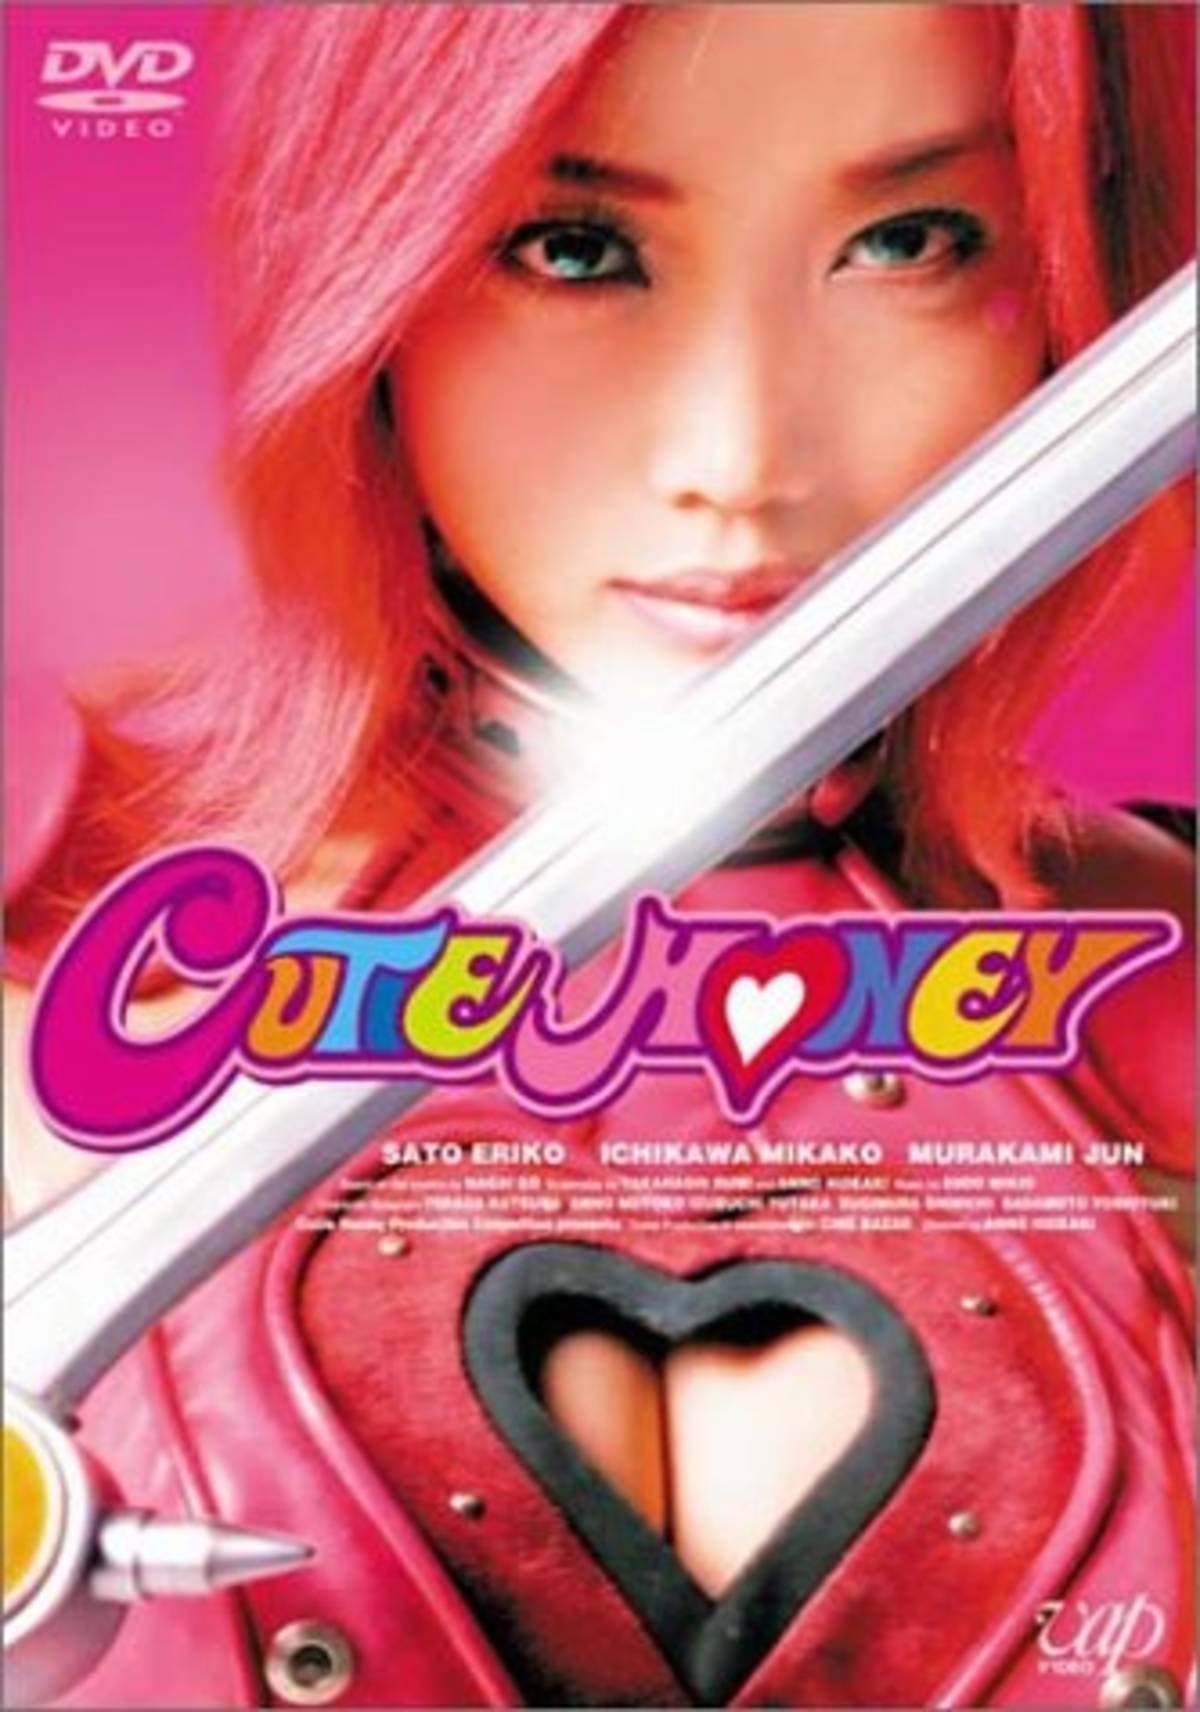 Cutie Honey Japanese Movies Wiki Fandom 5054